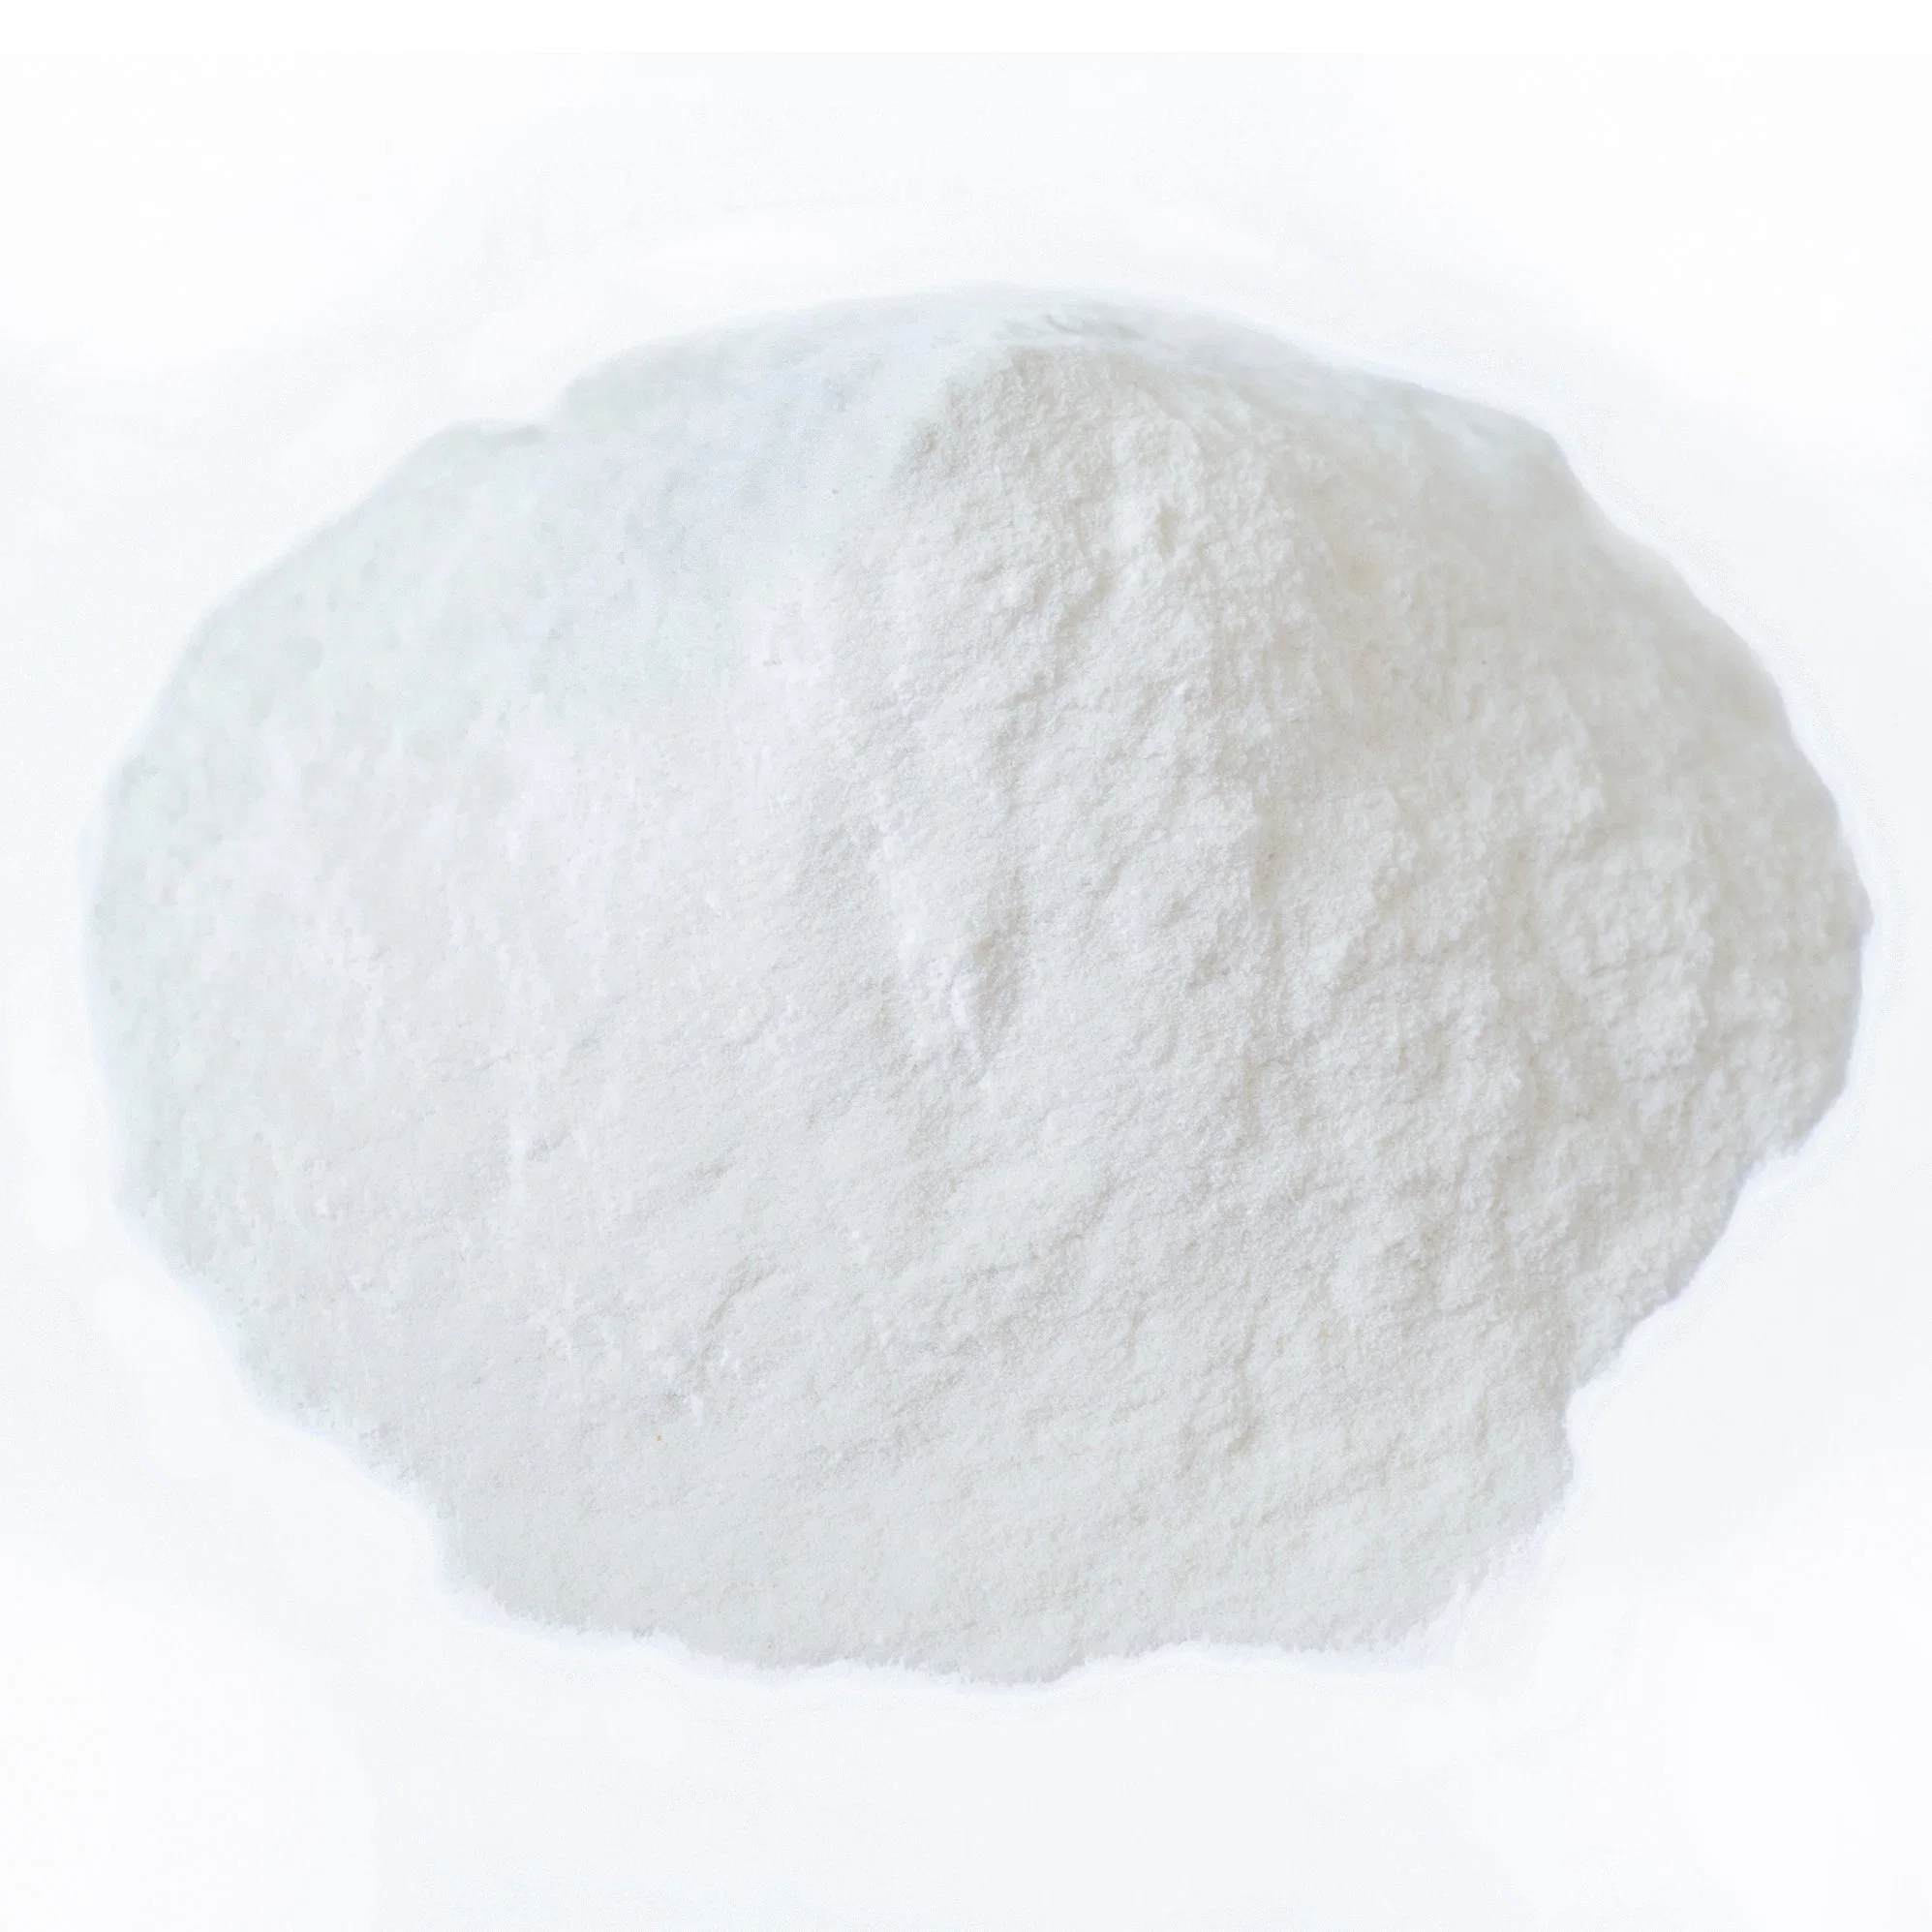 Re-Dispersible Emulsion Polymer Powder Rdp